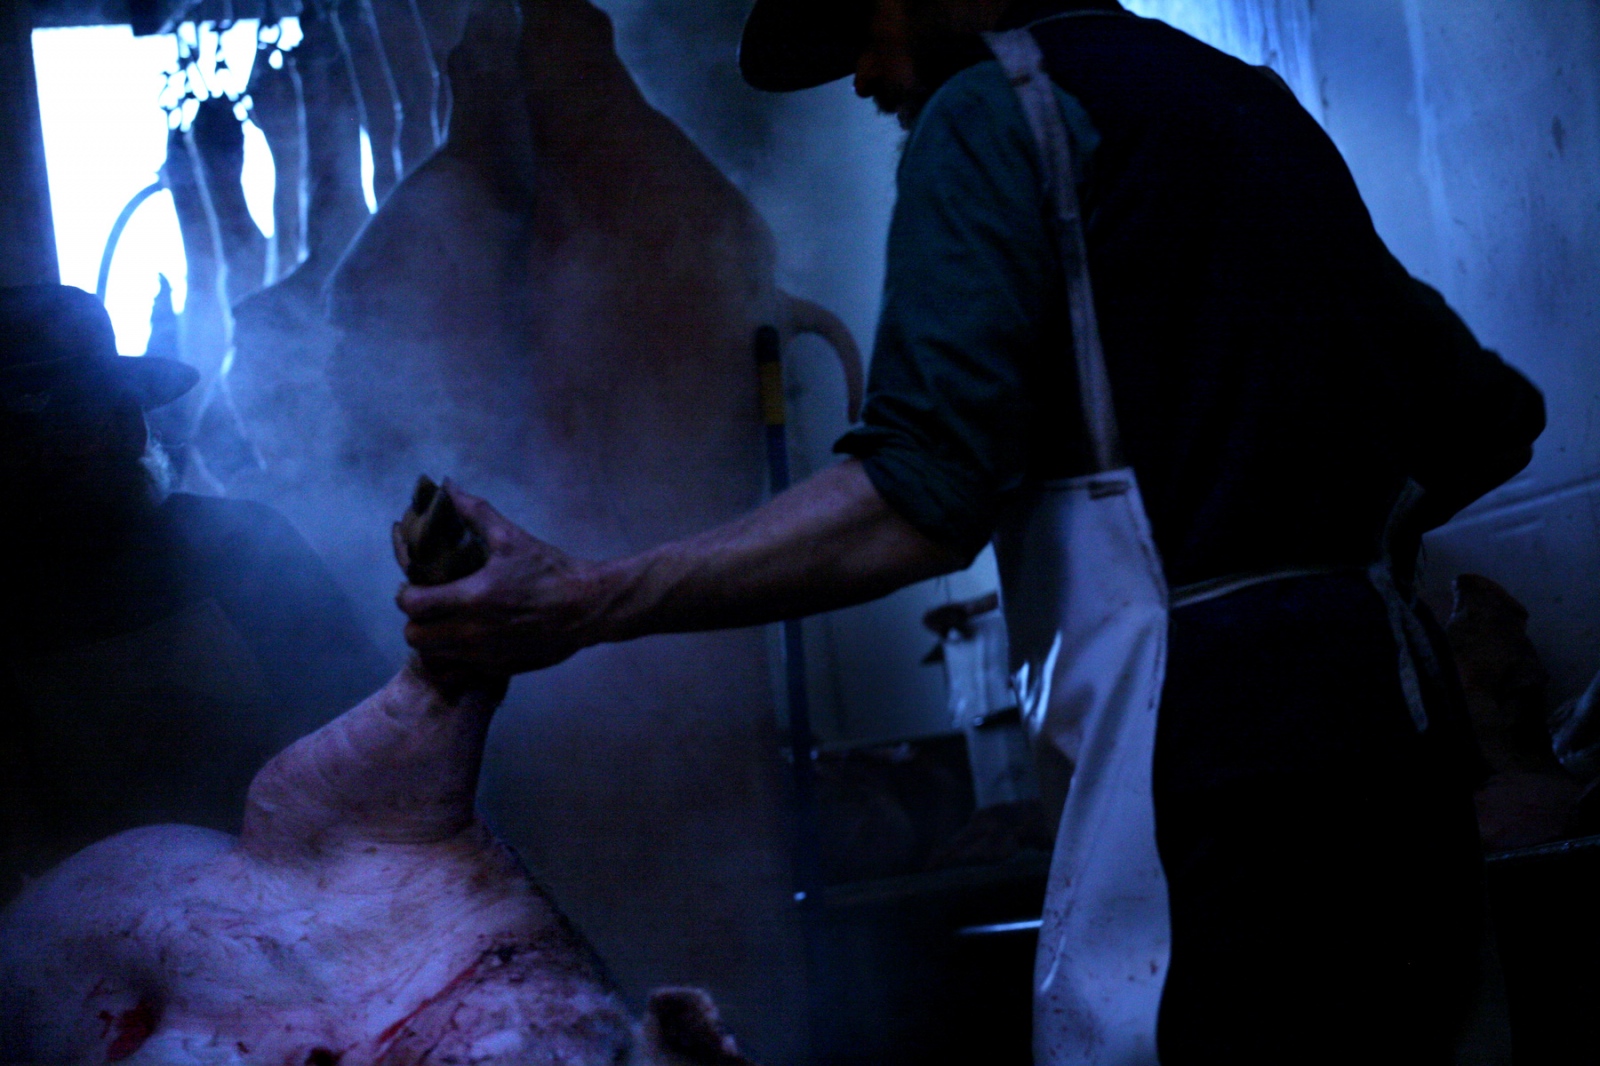  HOG KILL December is hog killi...ter, butchering and packaging. 